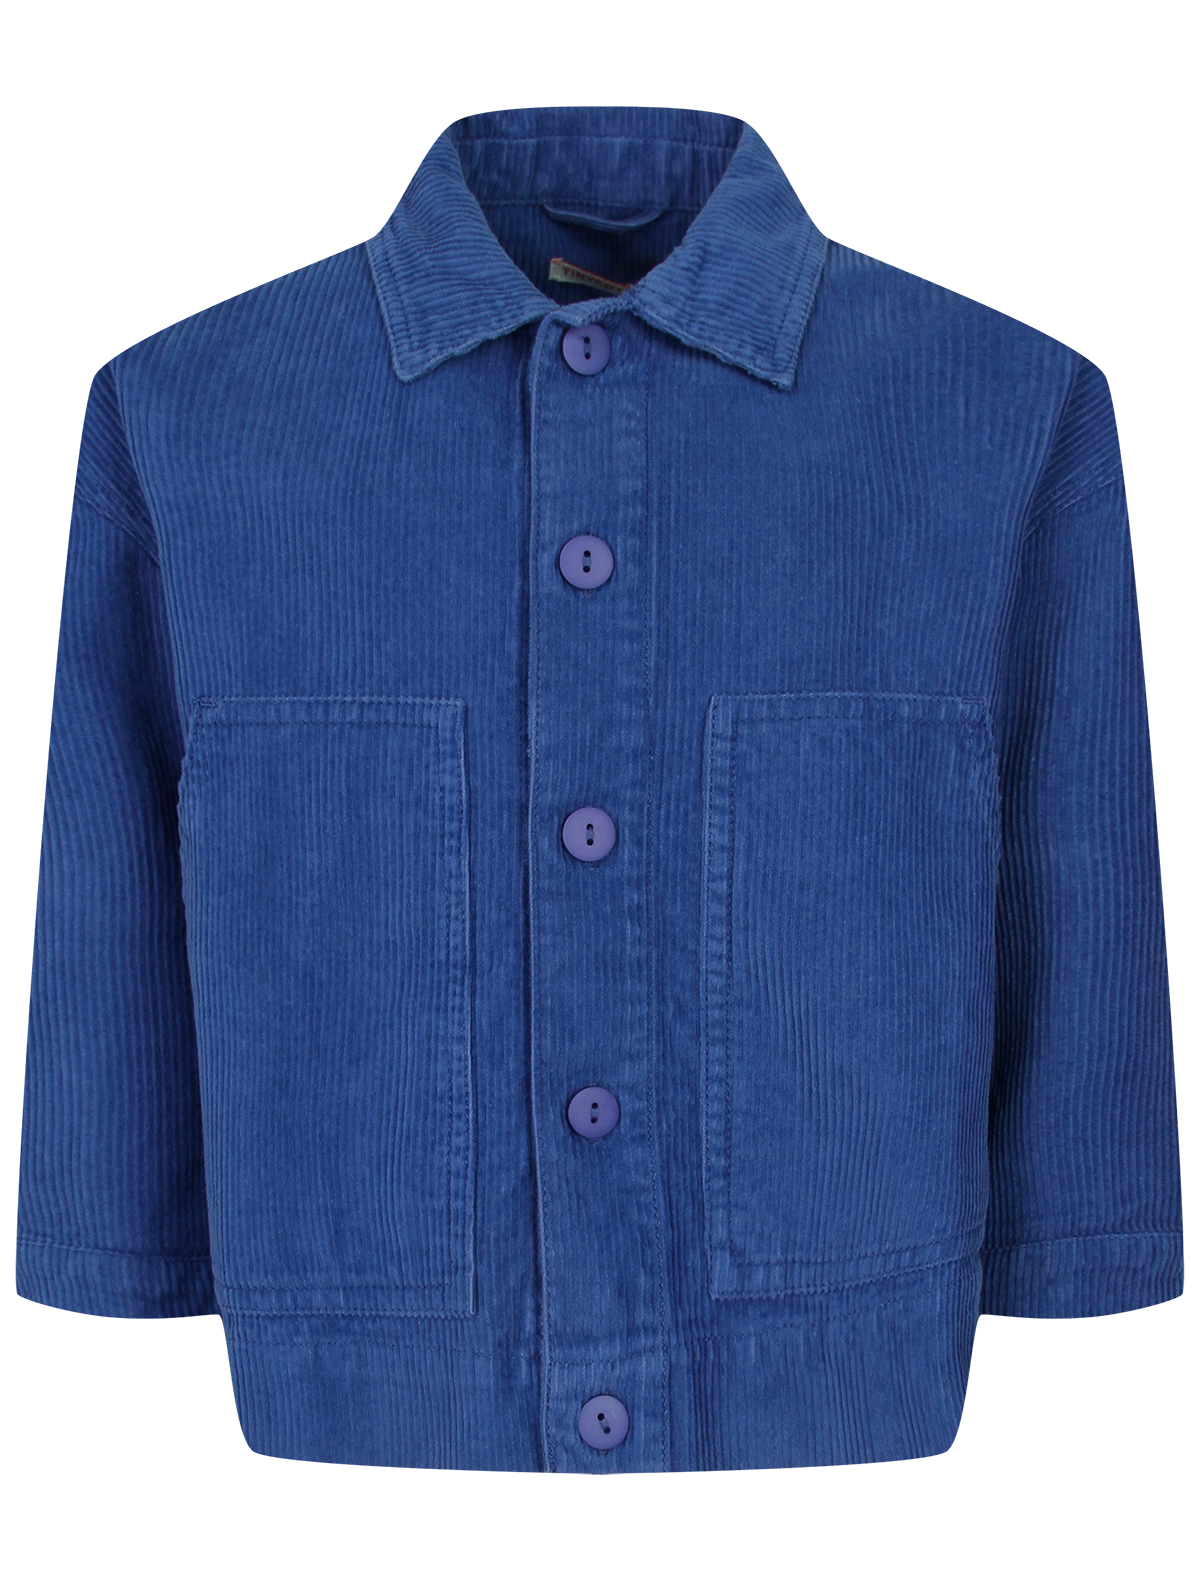 Куртка TINYCOTTONS 2618729, цвет синий, размер 4 1074519384615 - фото 1